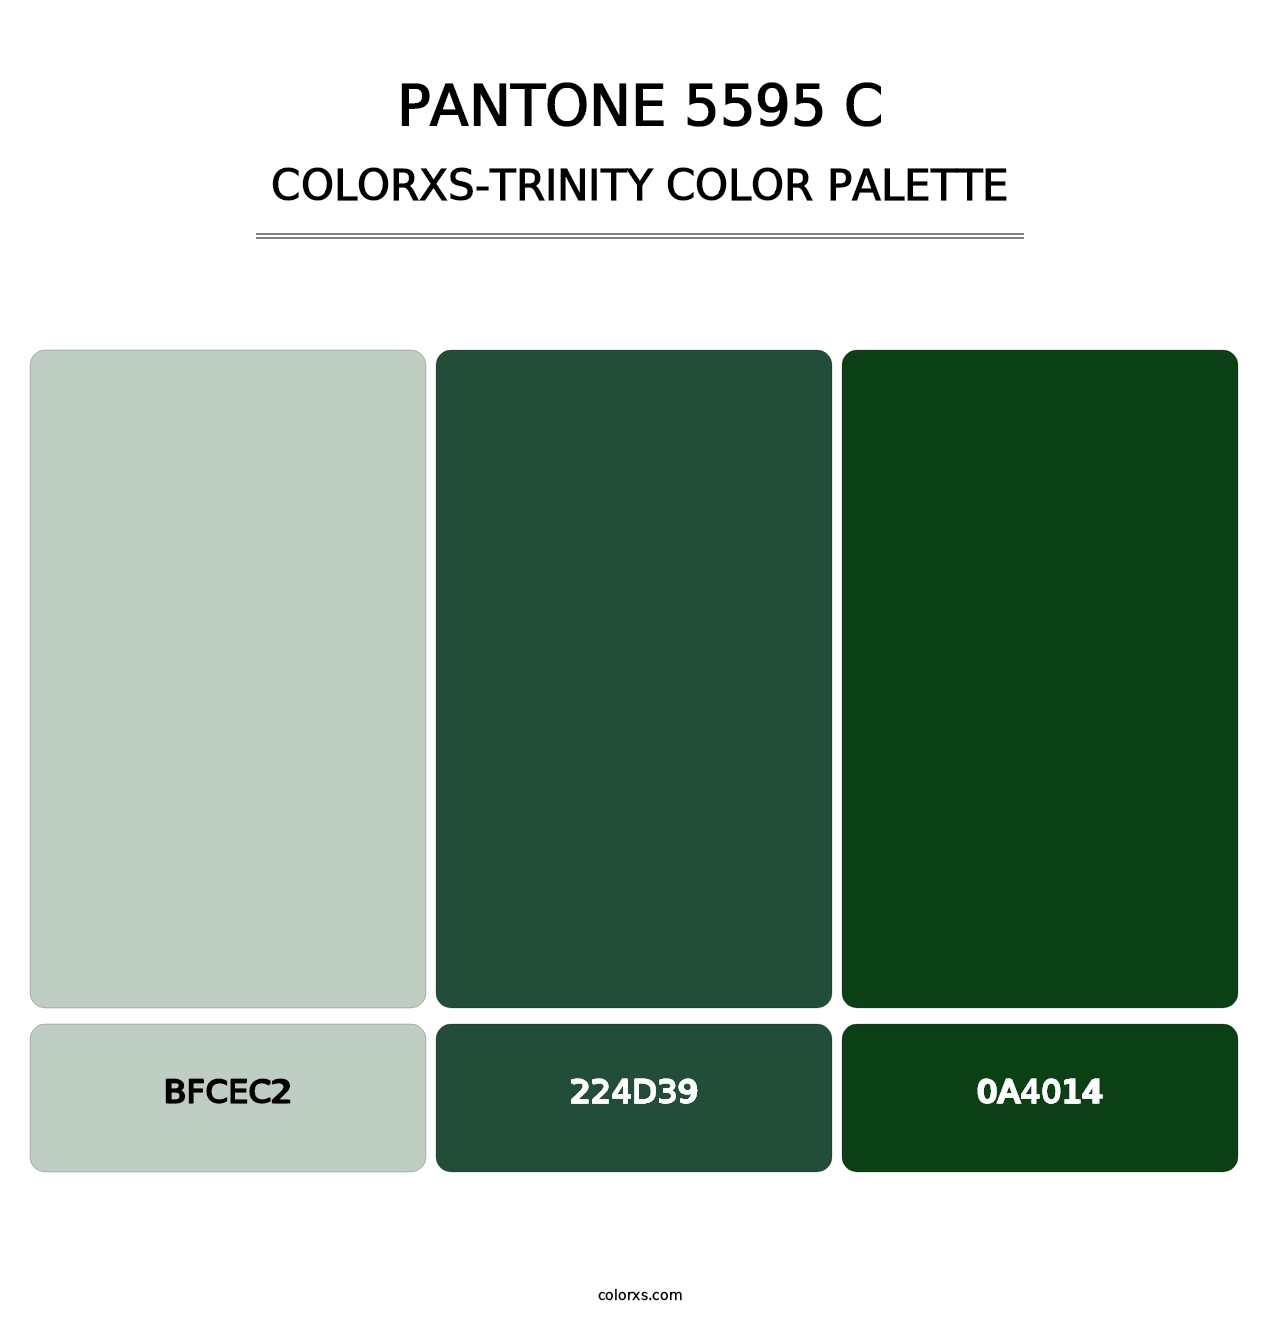 PANTONE 5595 C - Colorxs Trinity Palette